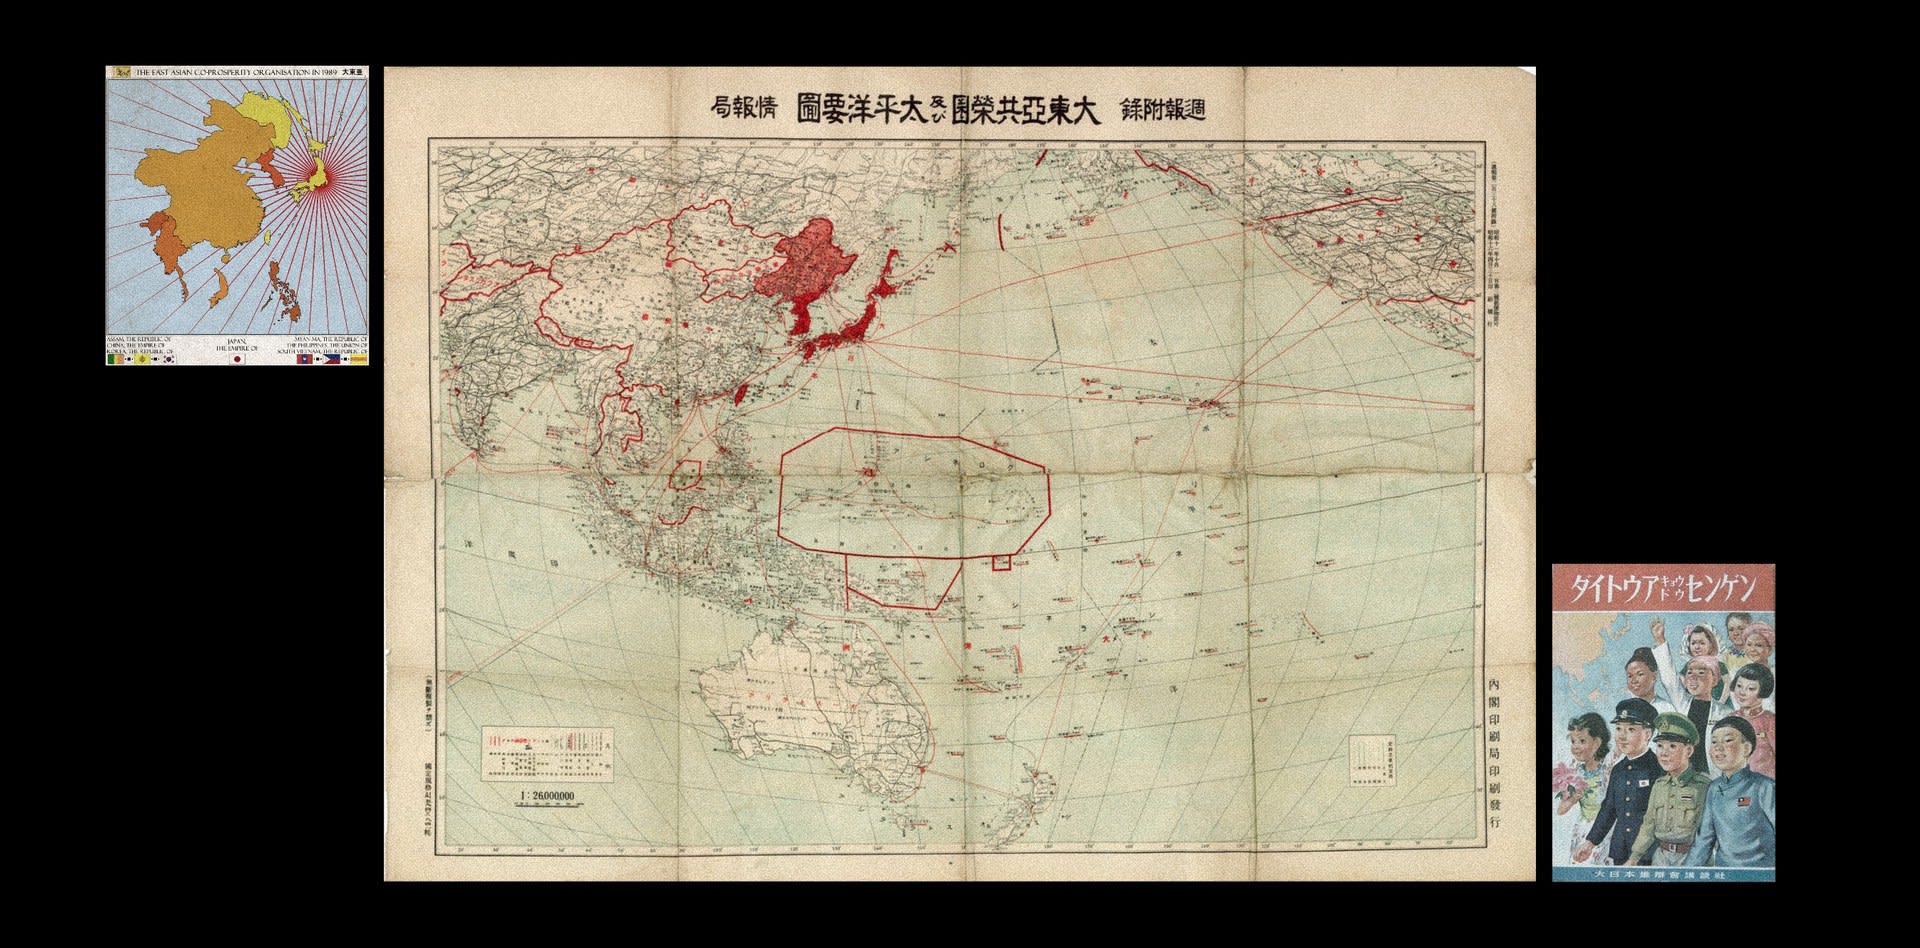 Map/Propaganda of Greater East Asia Co-Prosperity Sphere